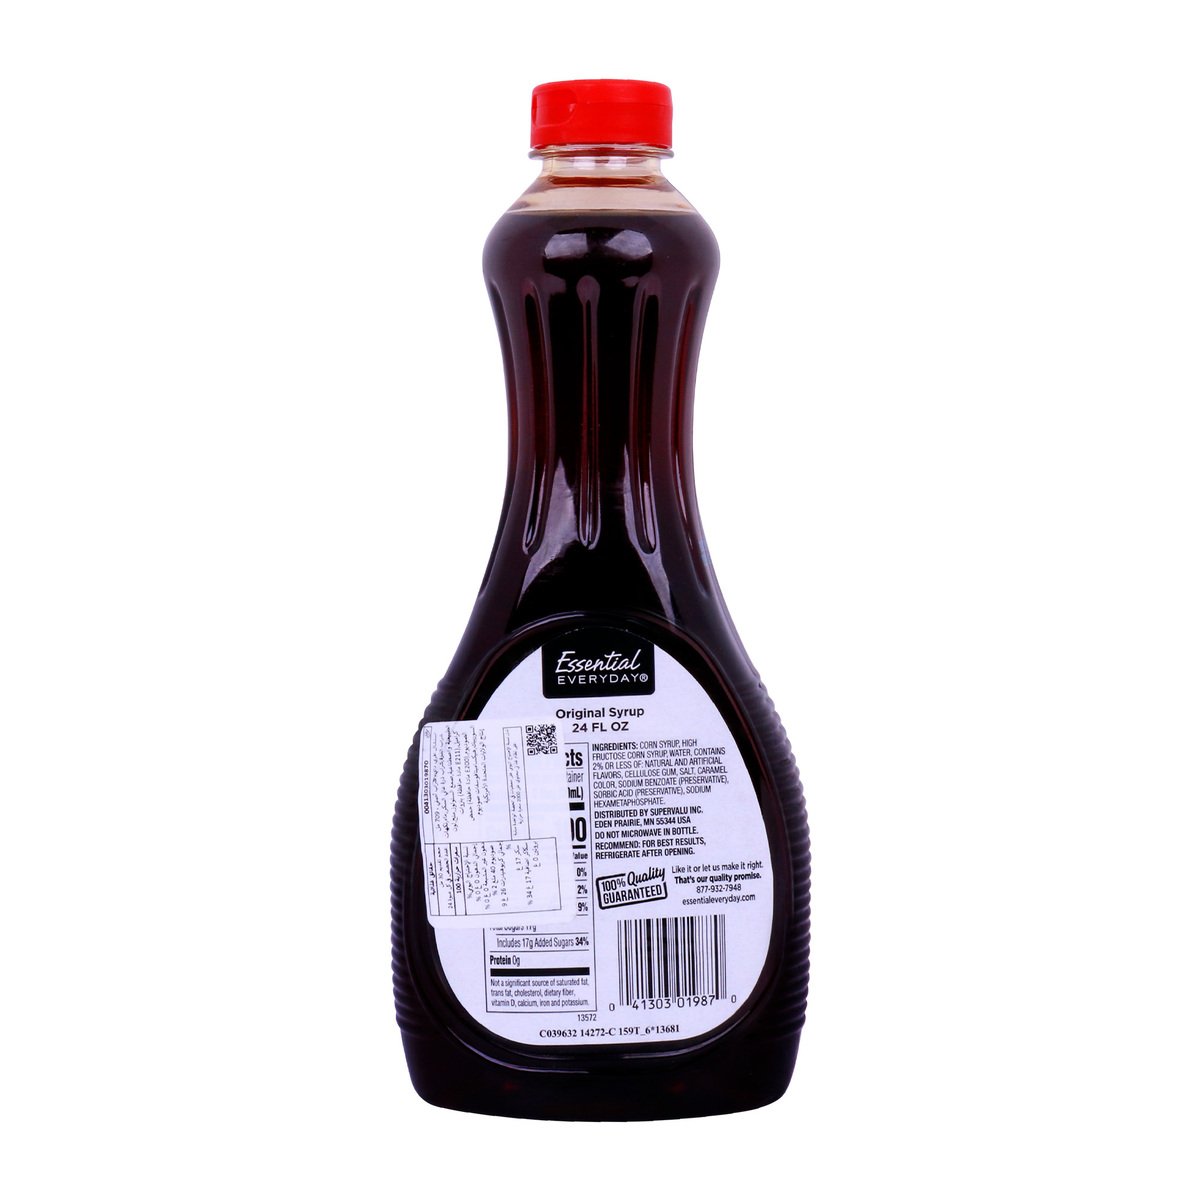 Essential Everyday Original Syrup 709ml